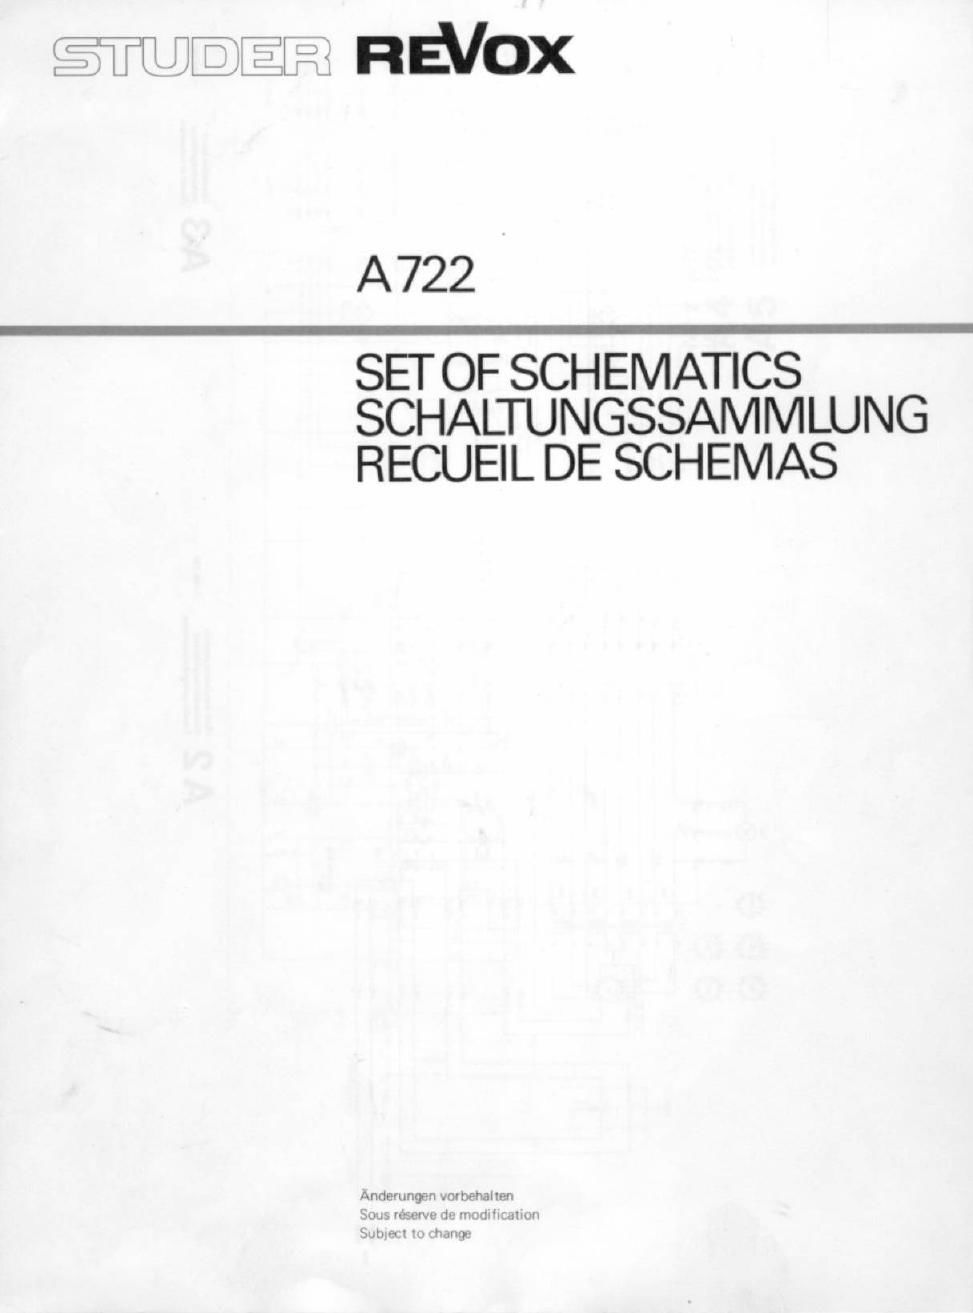 revox A722 schematics 2